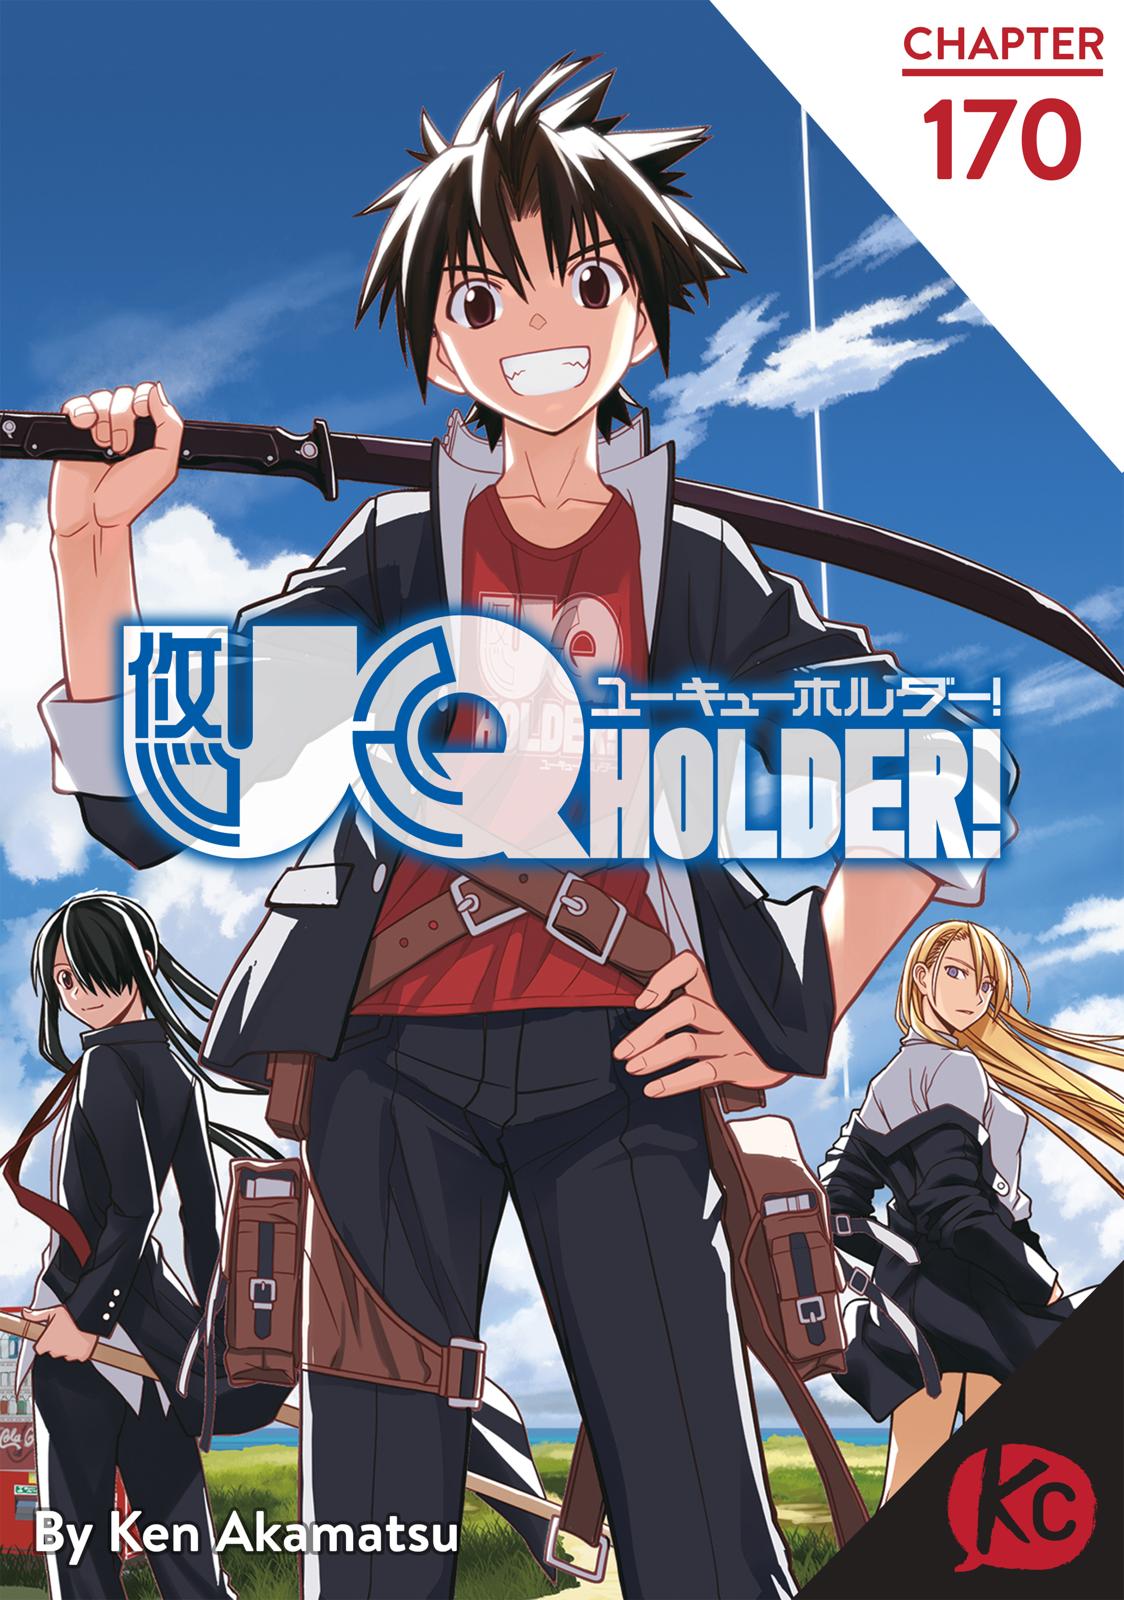 Anime Uq Holder Porn - Uq Holder! - Chapter 170 - Read Manhwa Hentai - Hentai Manga - Porn Comics  - Manhwa 18 - Hentai Haven - E hentai - Hentai Comics